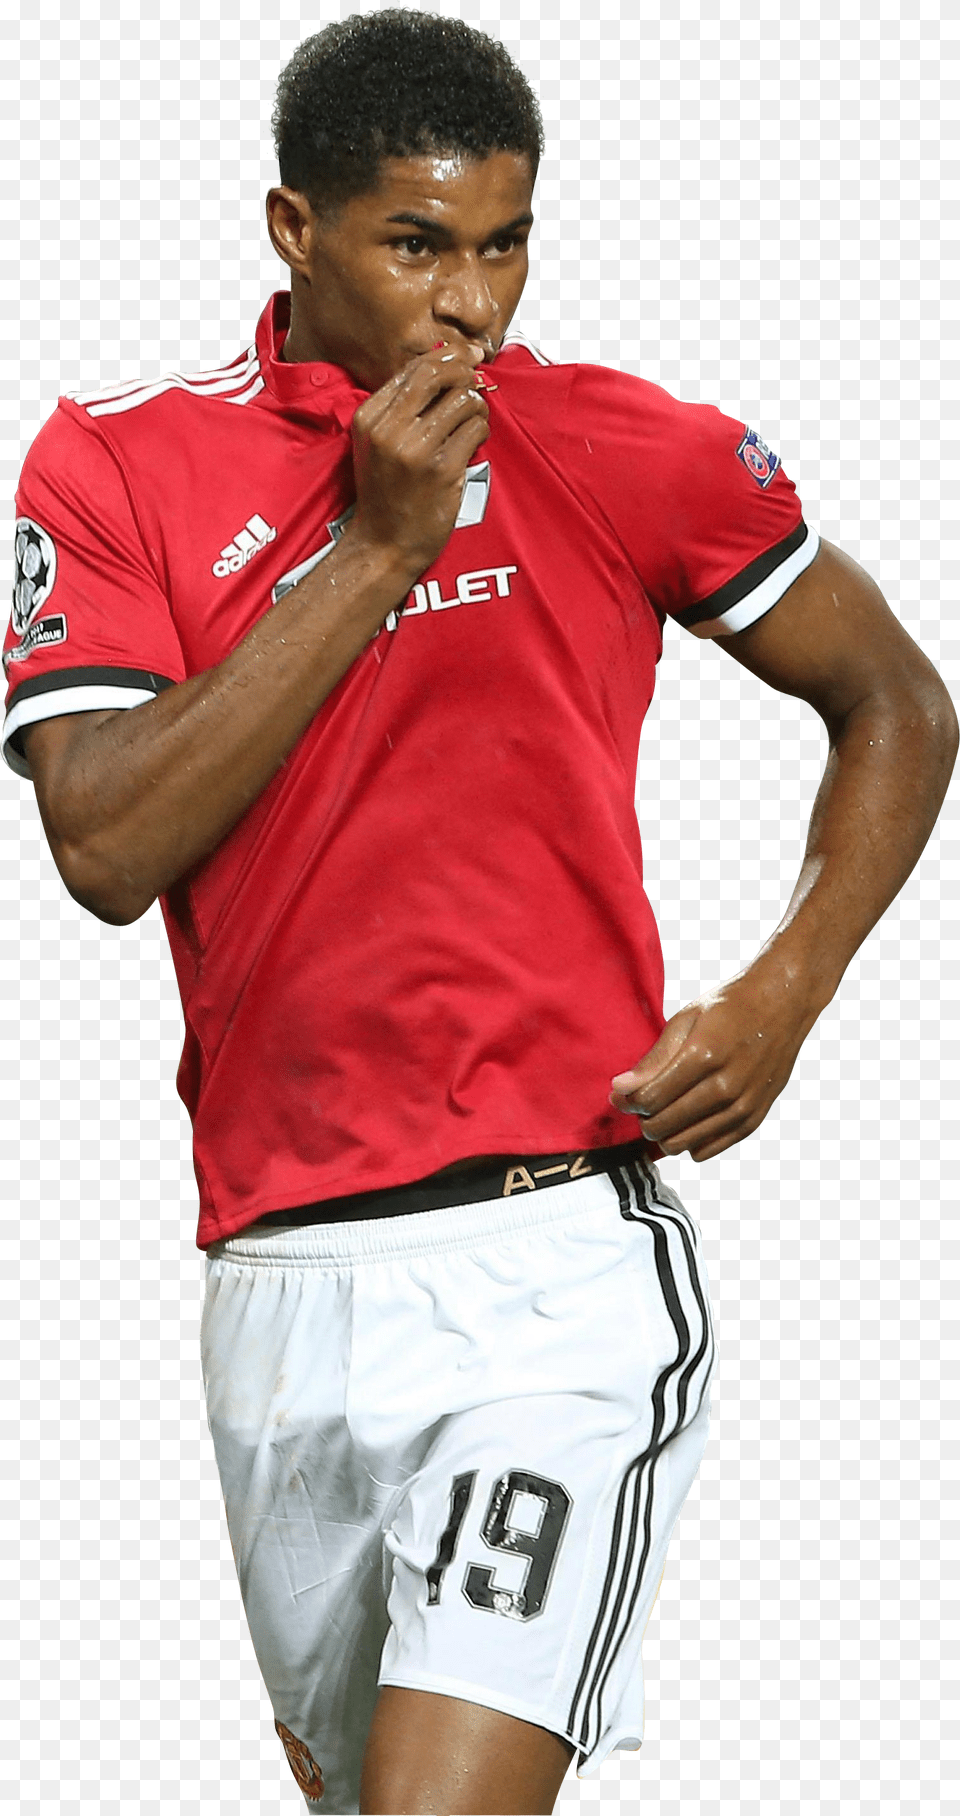 Clip Art Shirtless Football Players Rashford Manchester United, Clothing, Shirt, Shorts, Adult Png Image